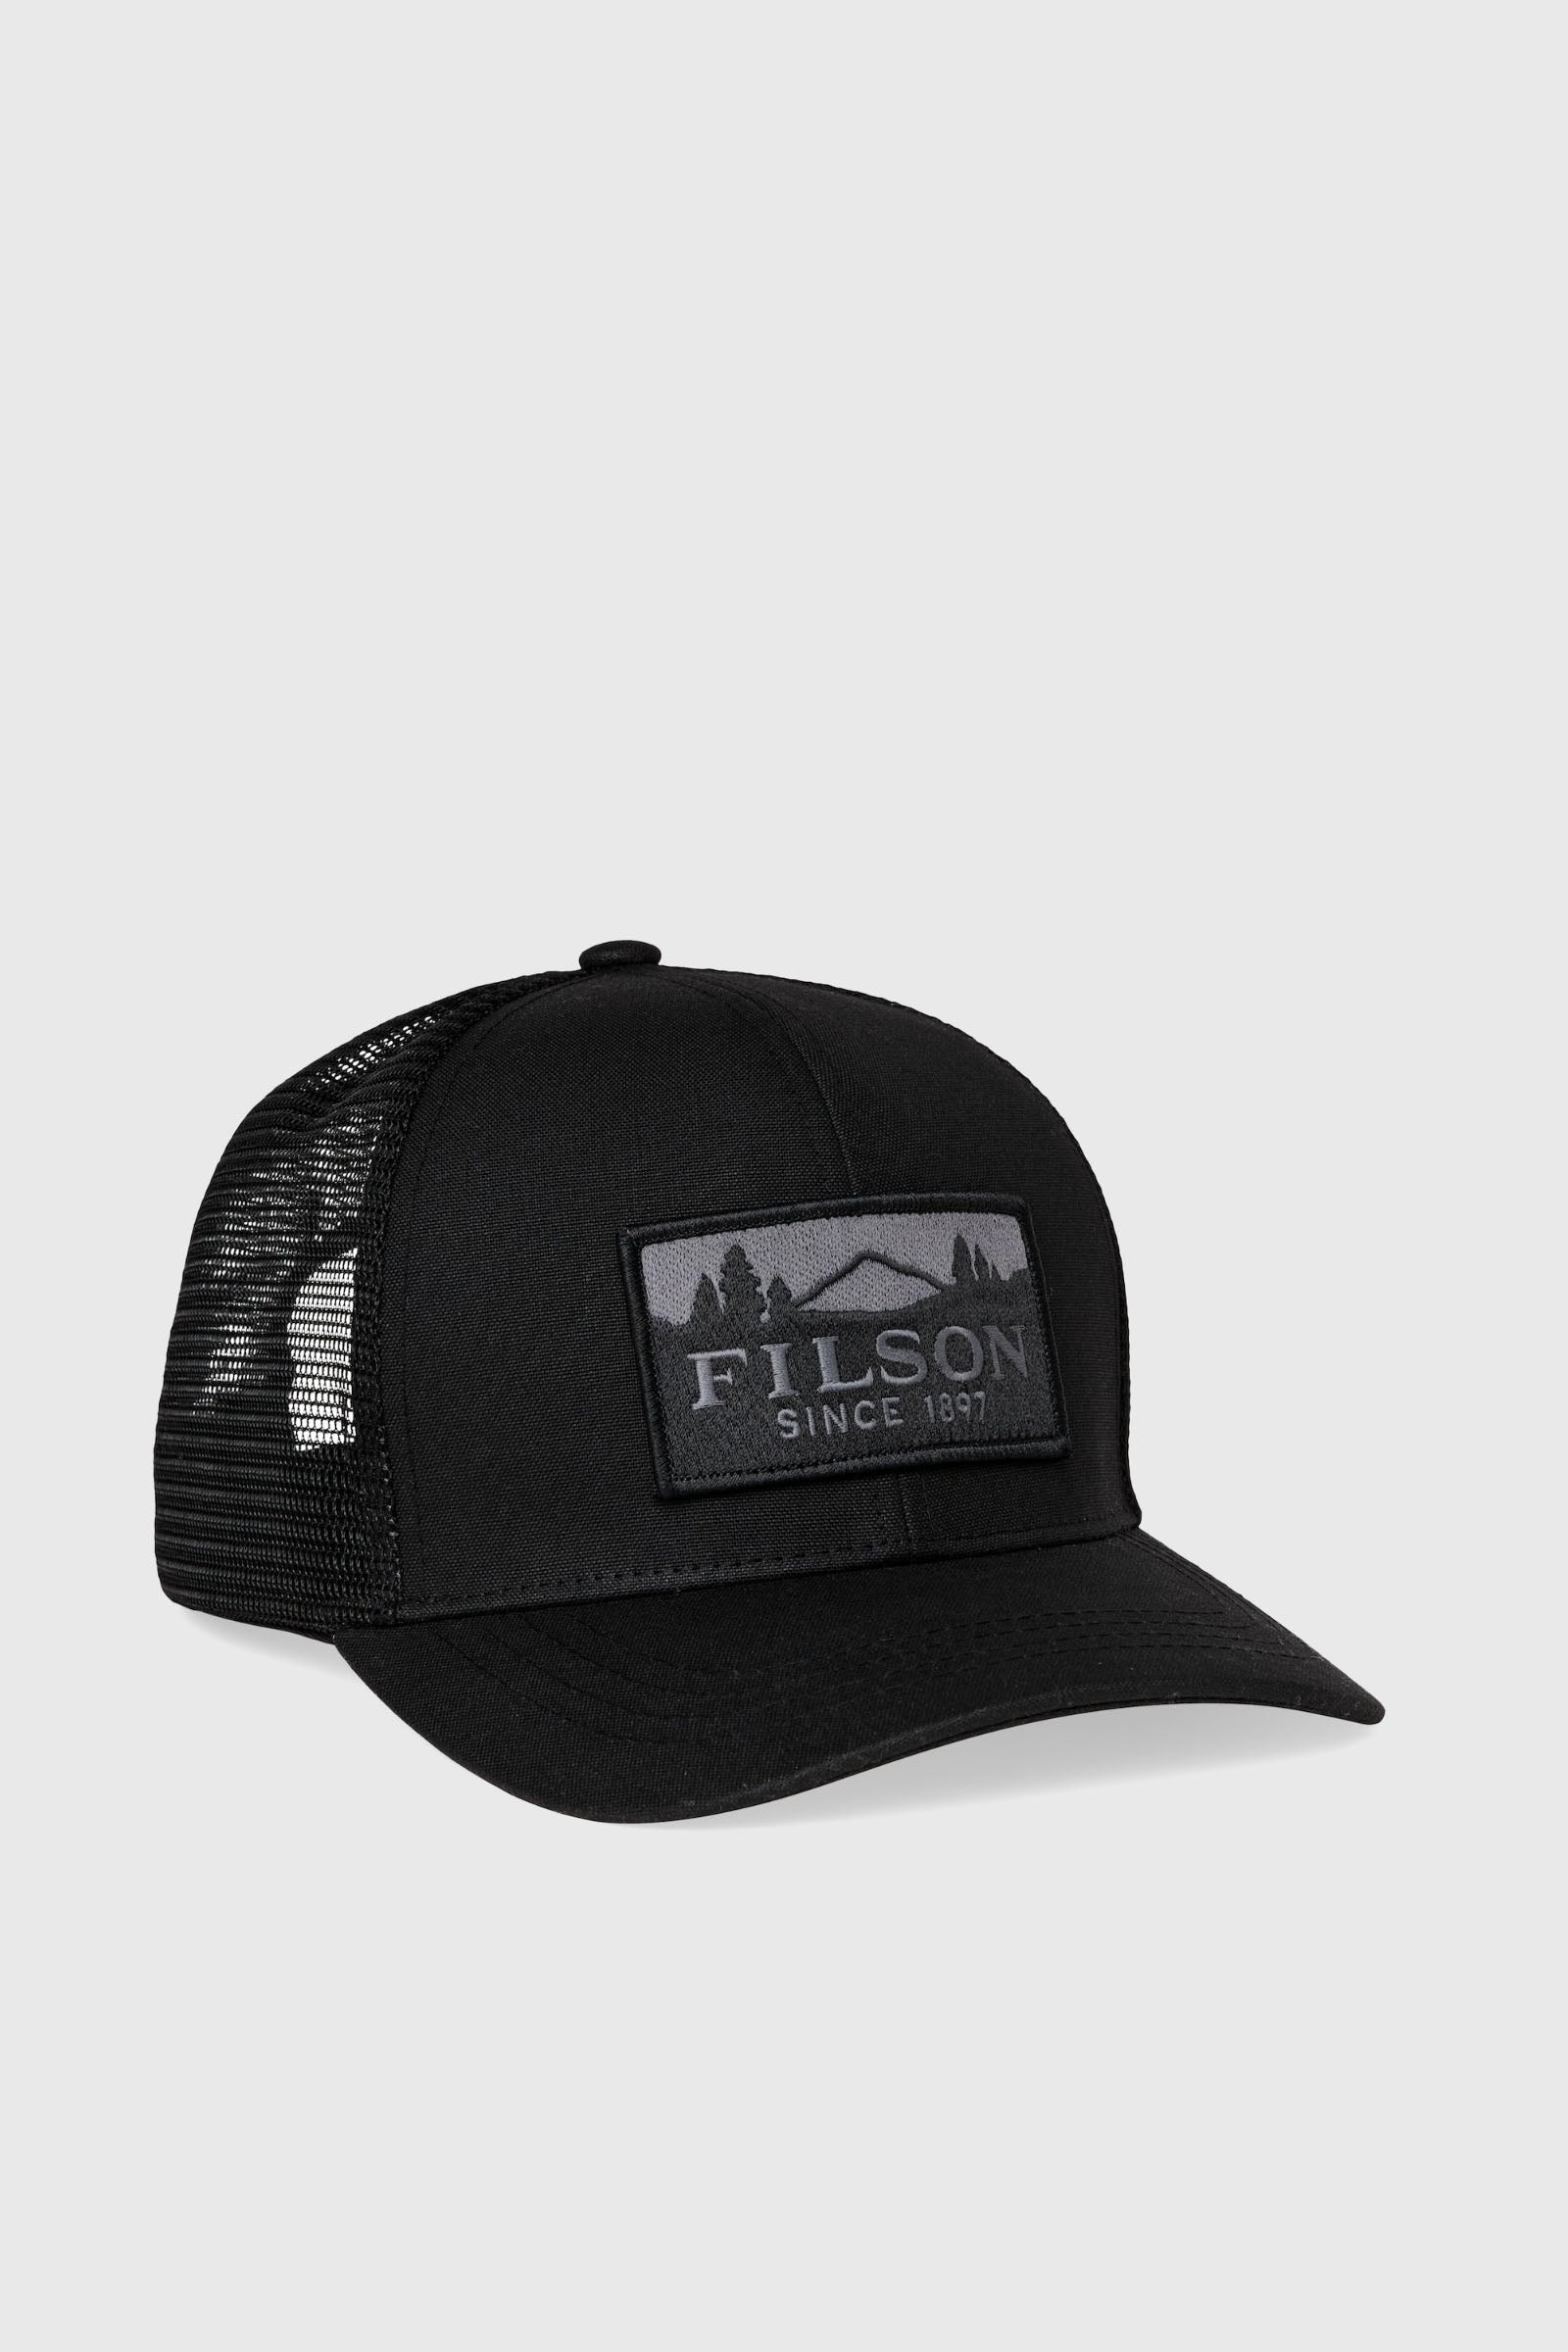 Filson Synthetic Mesh Logger Cap Black - 1